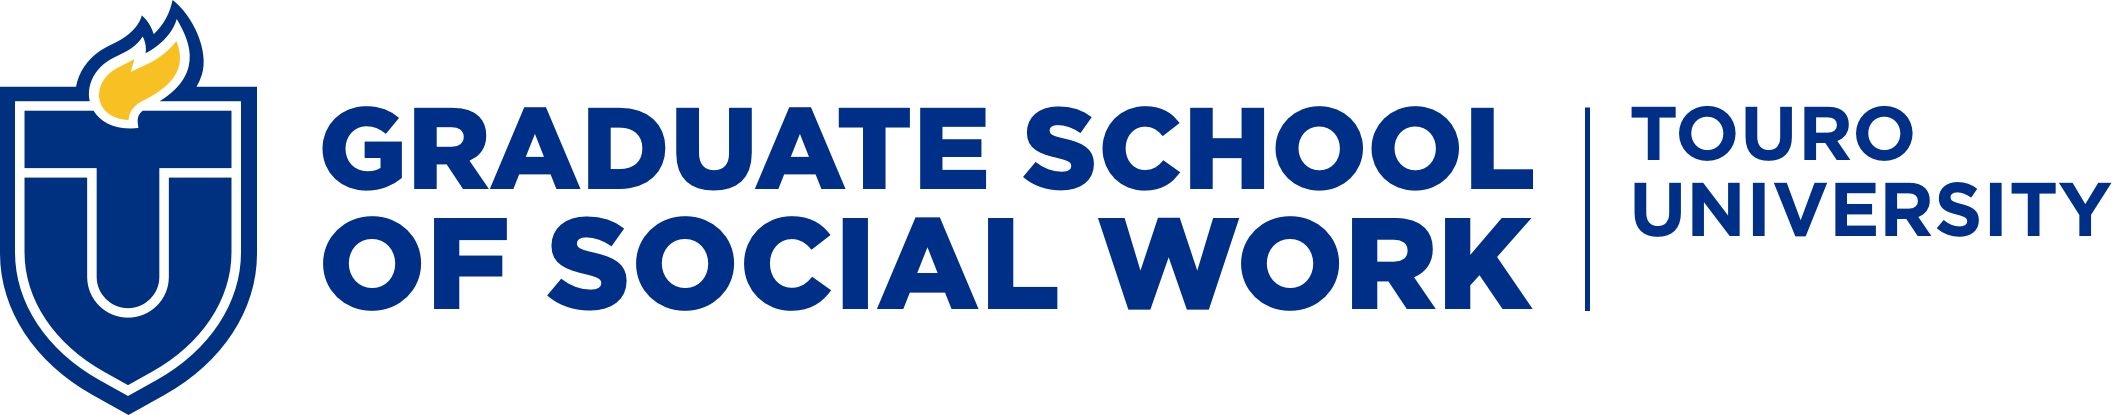 Graduate School of Social Work